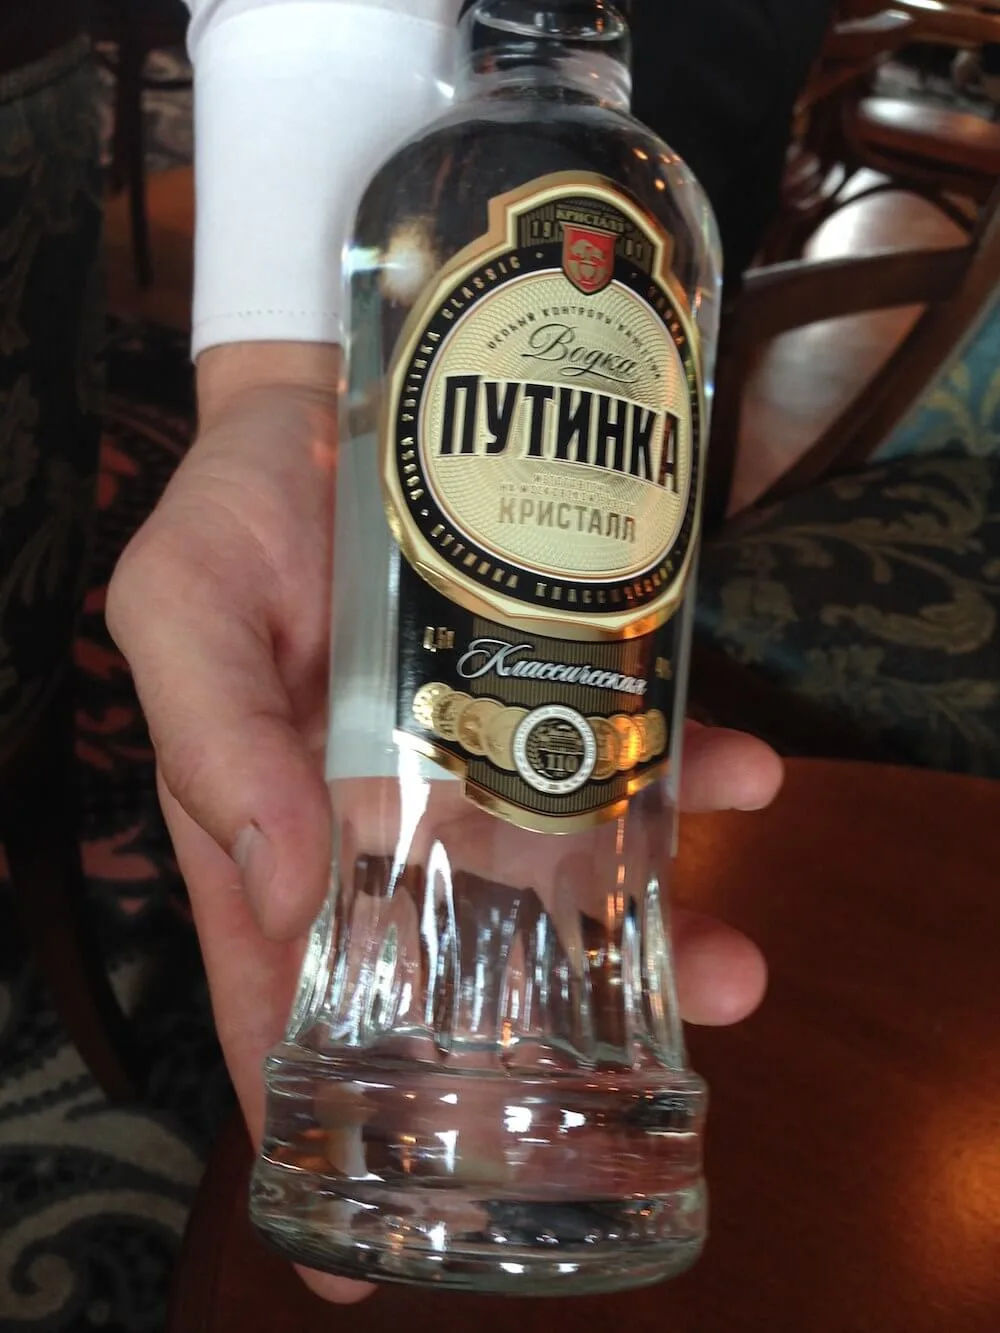 Vodka tasting in Russia